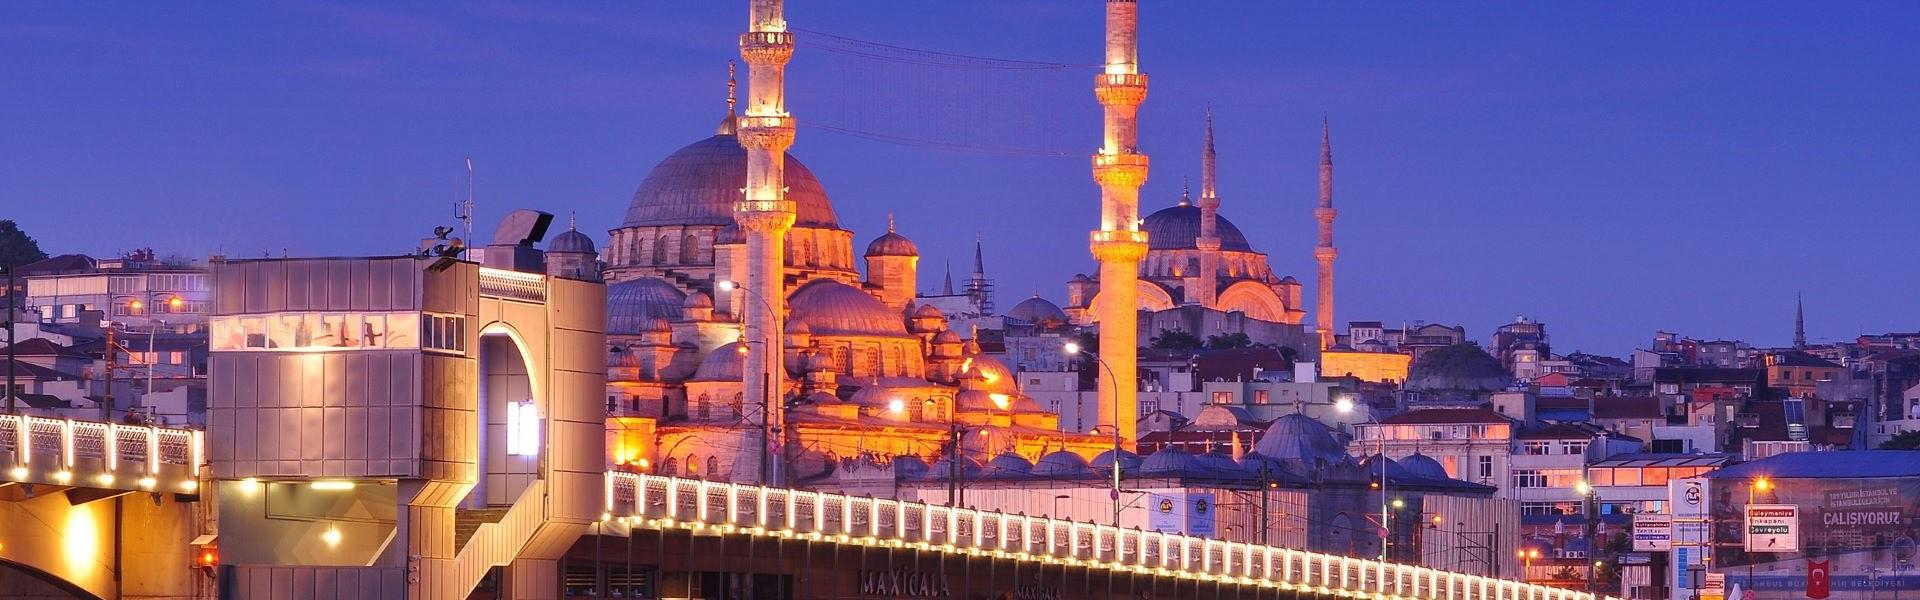 مسجد رستم پاشا استانبول Rustem pasa mosque Istanbul